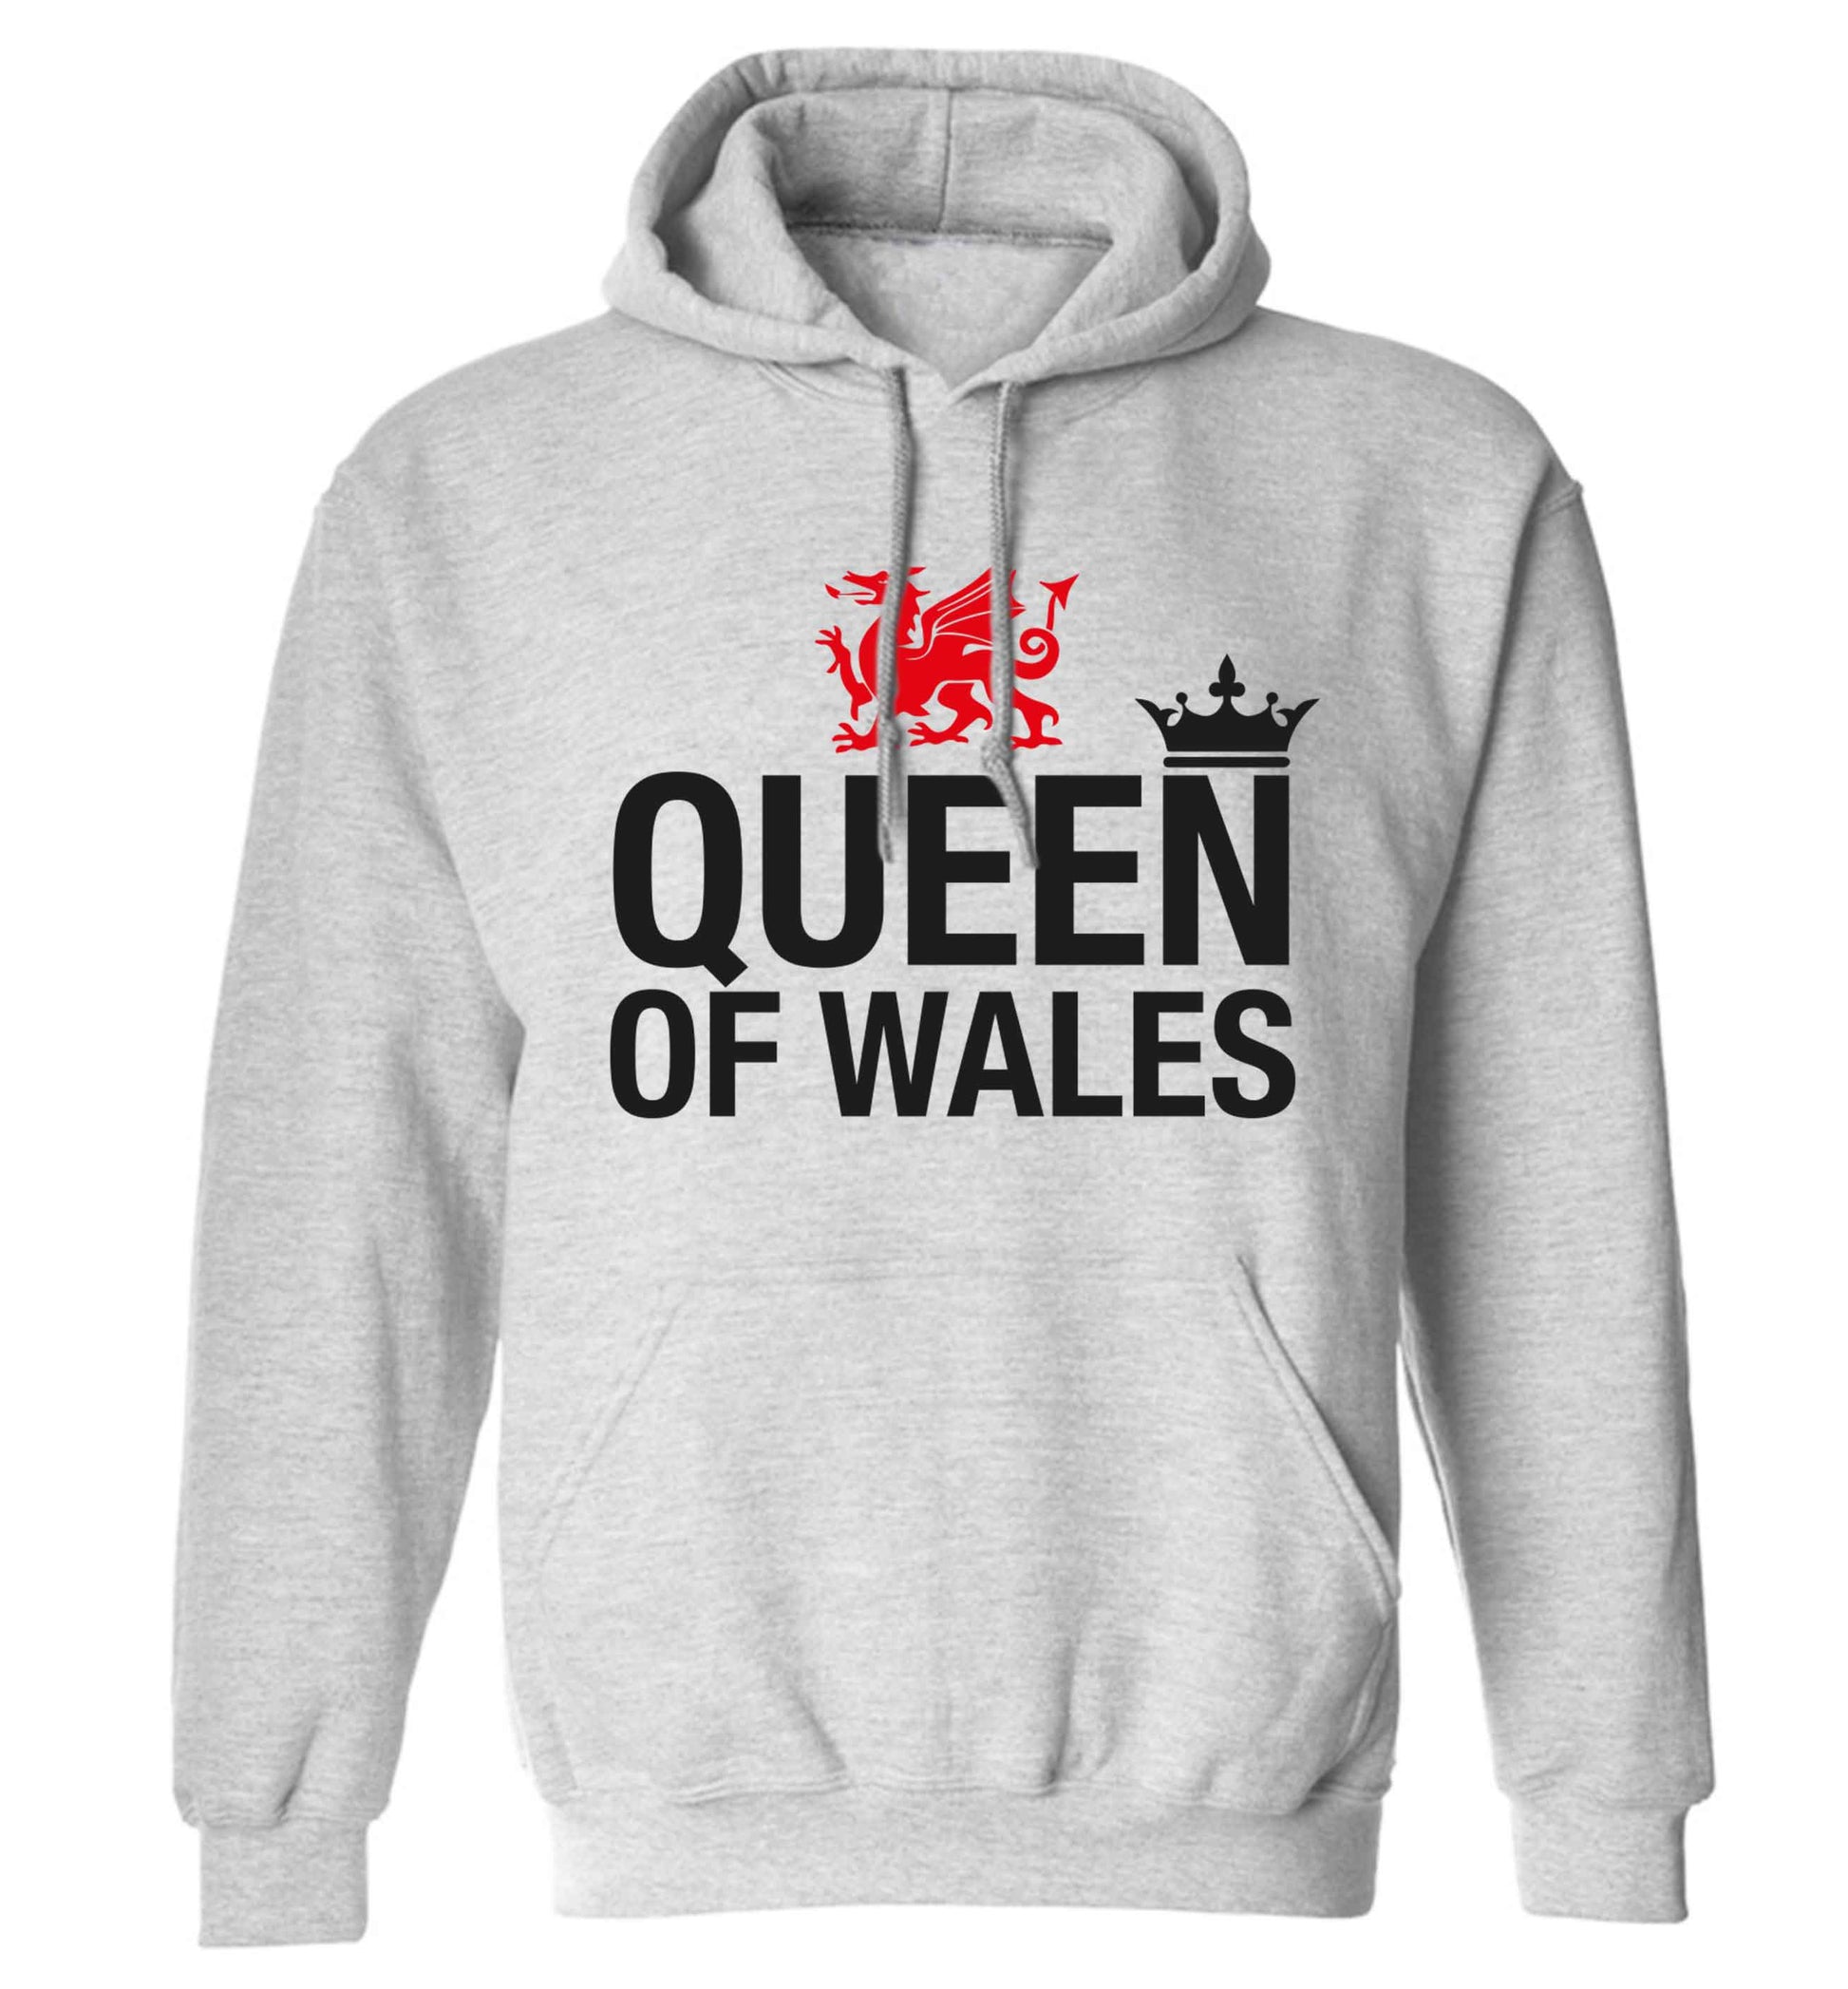 Queen of Wales adults unisex grey hoodie 2XL